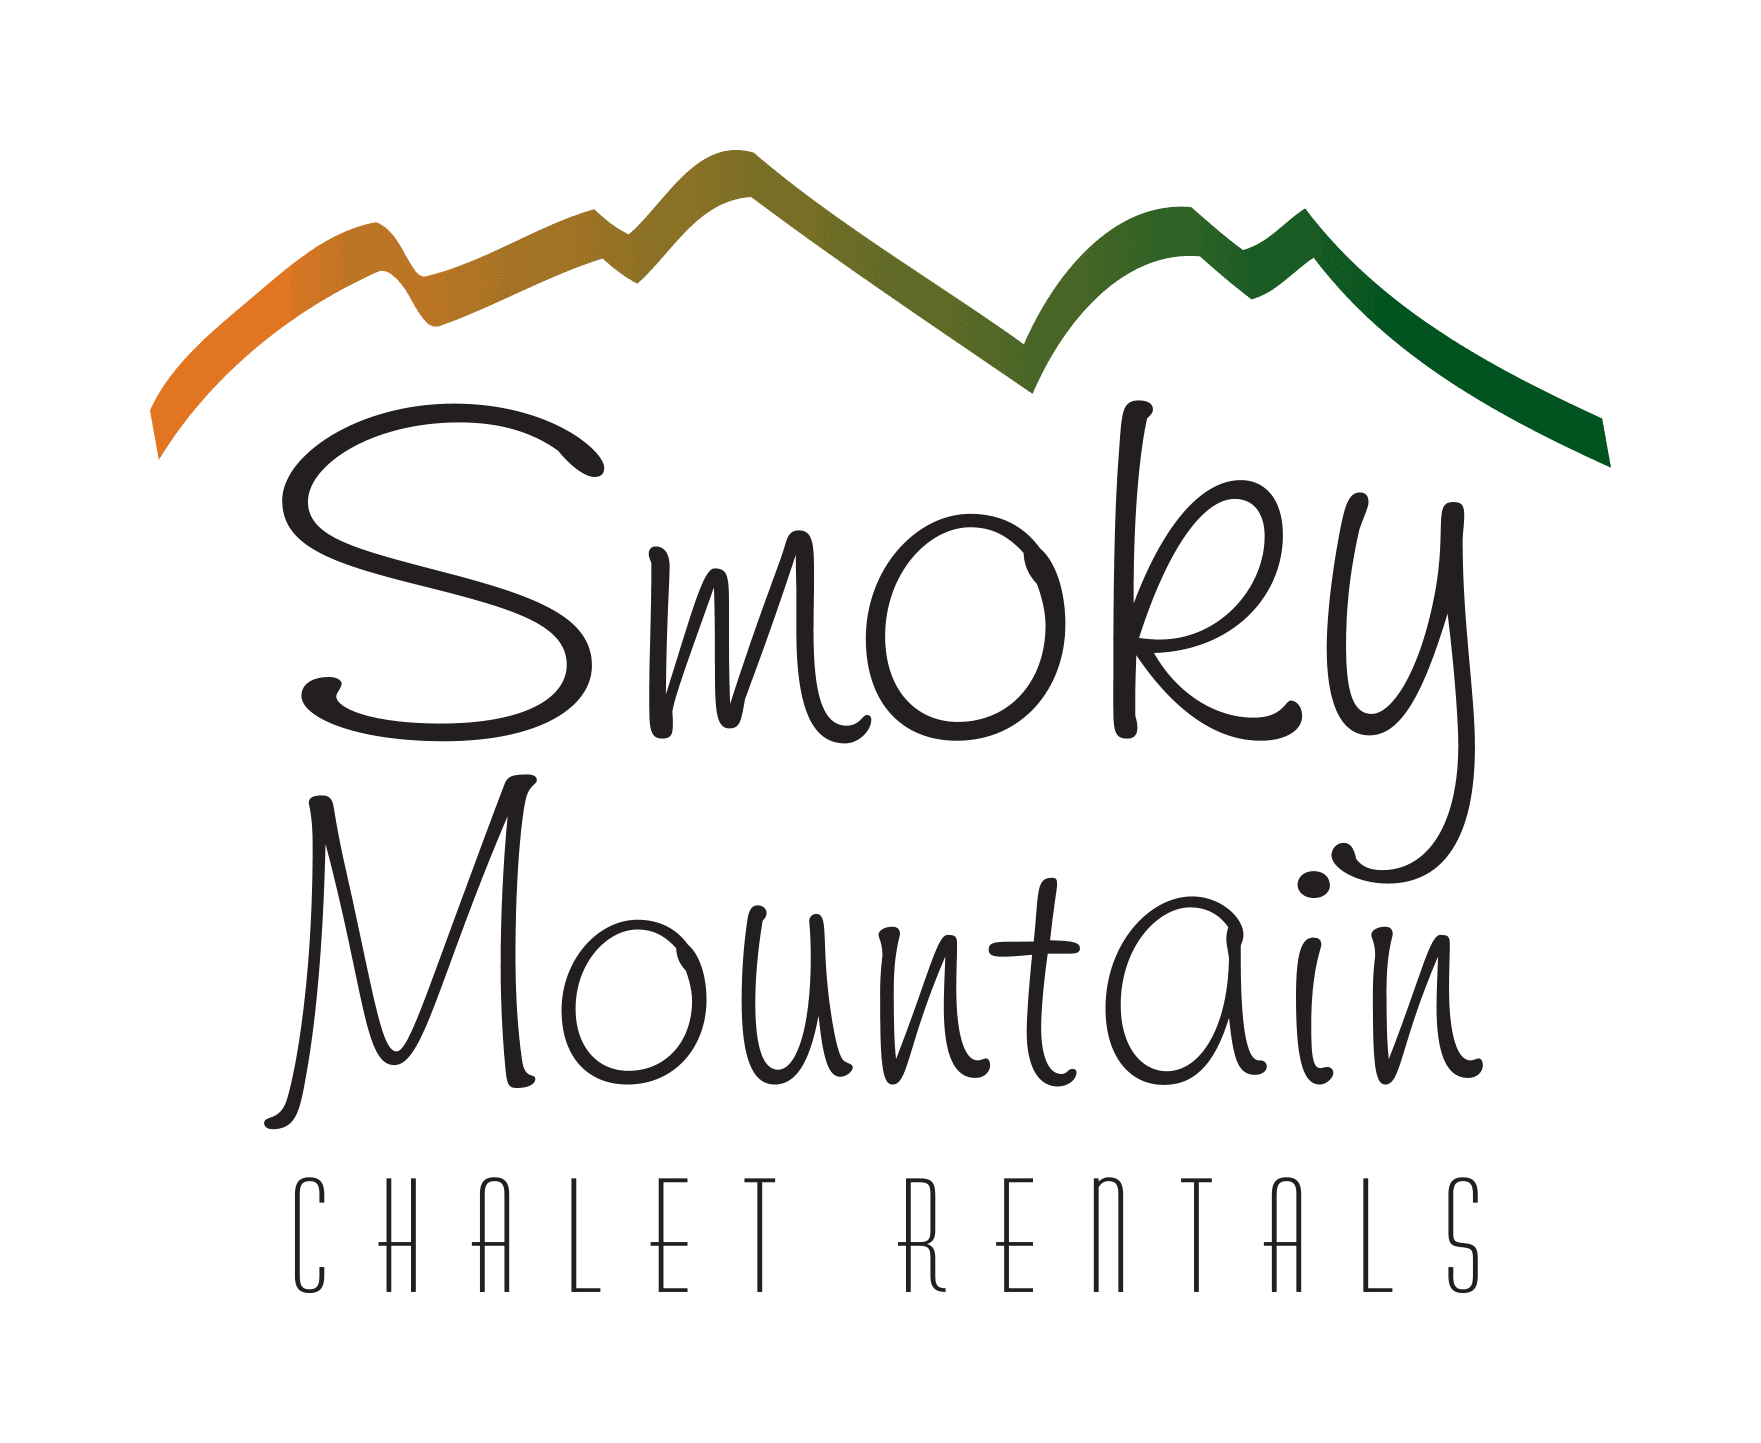 Smoky Mountain Chalet Rentals